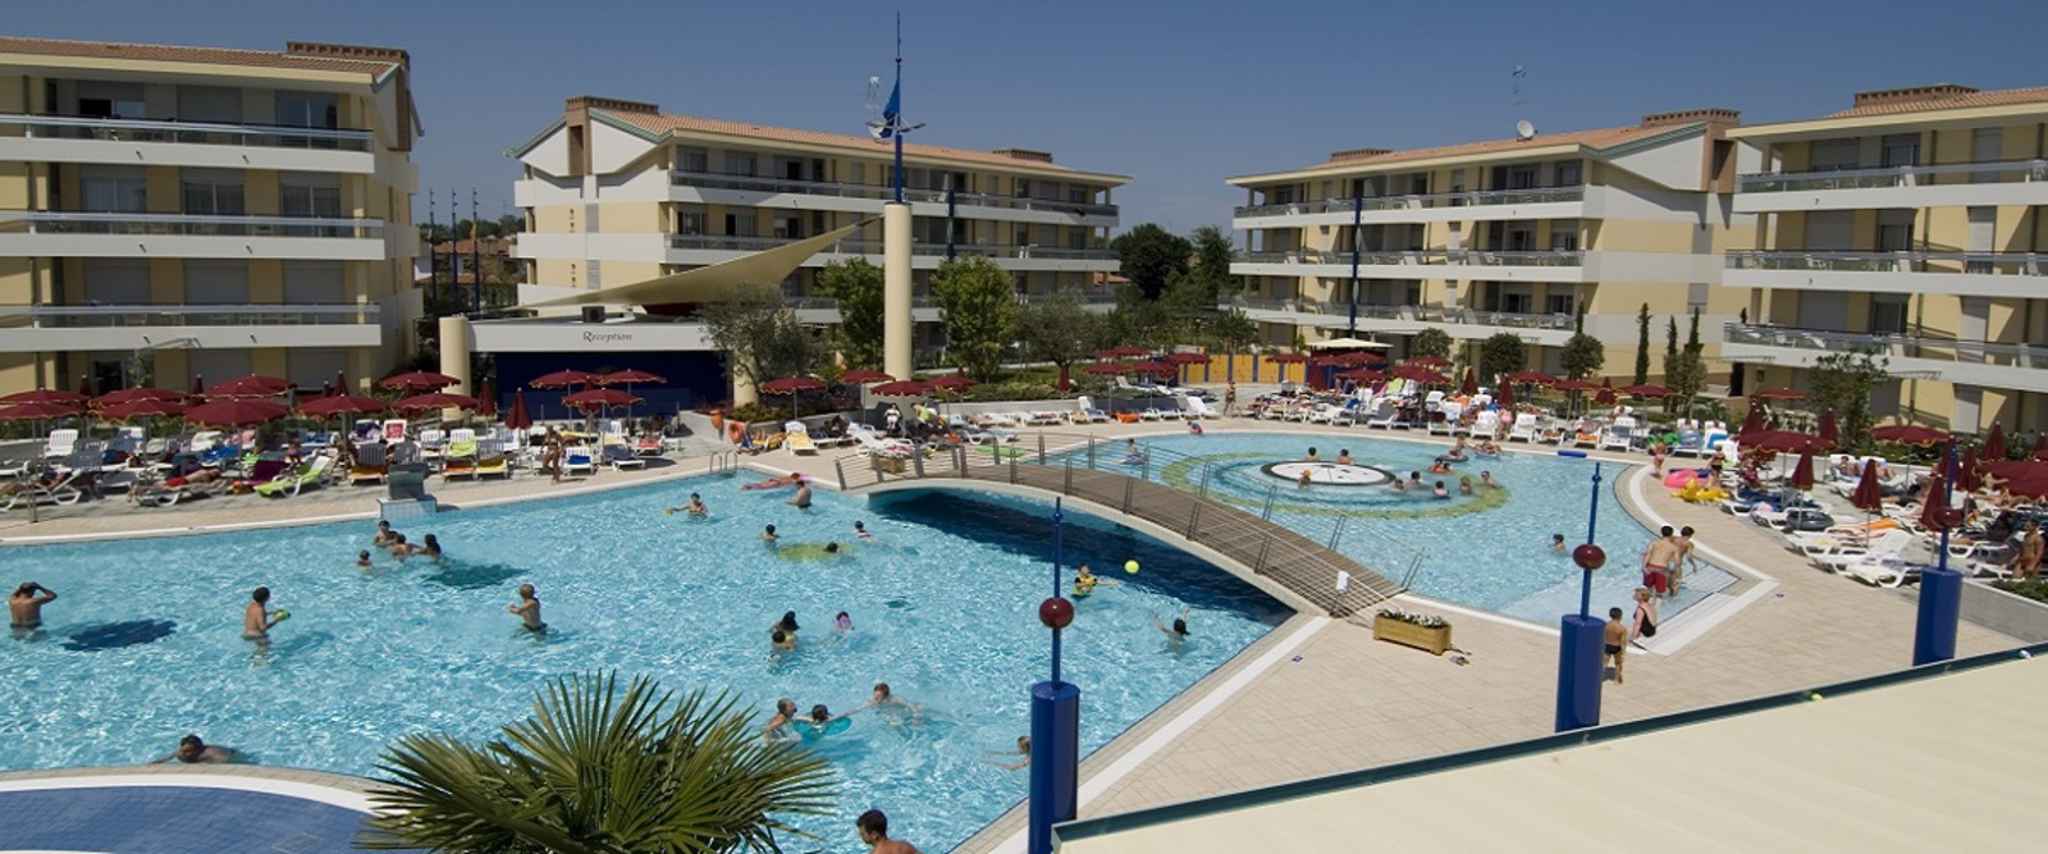 Hotelapartment mit Pool  in Bibione